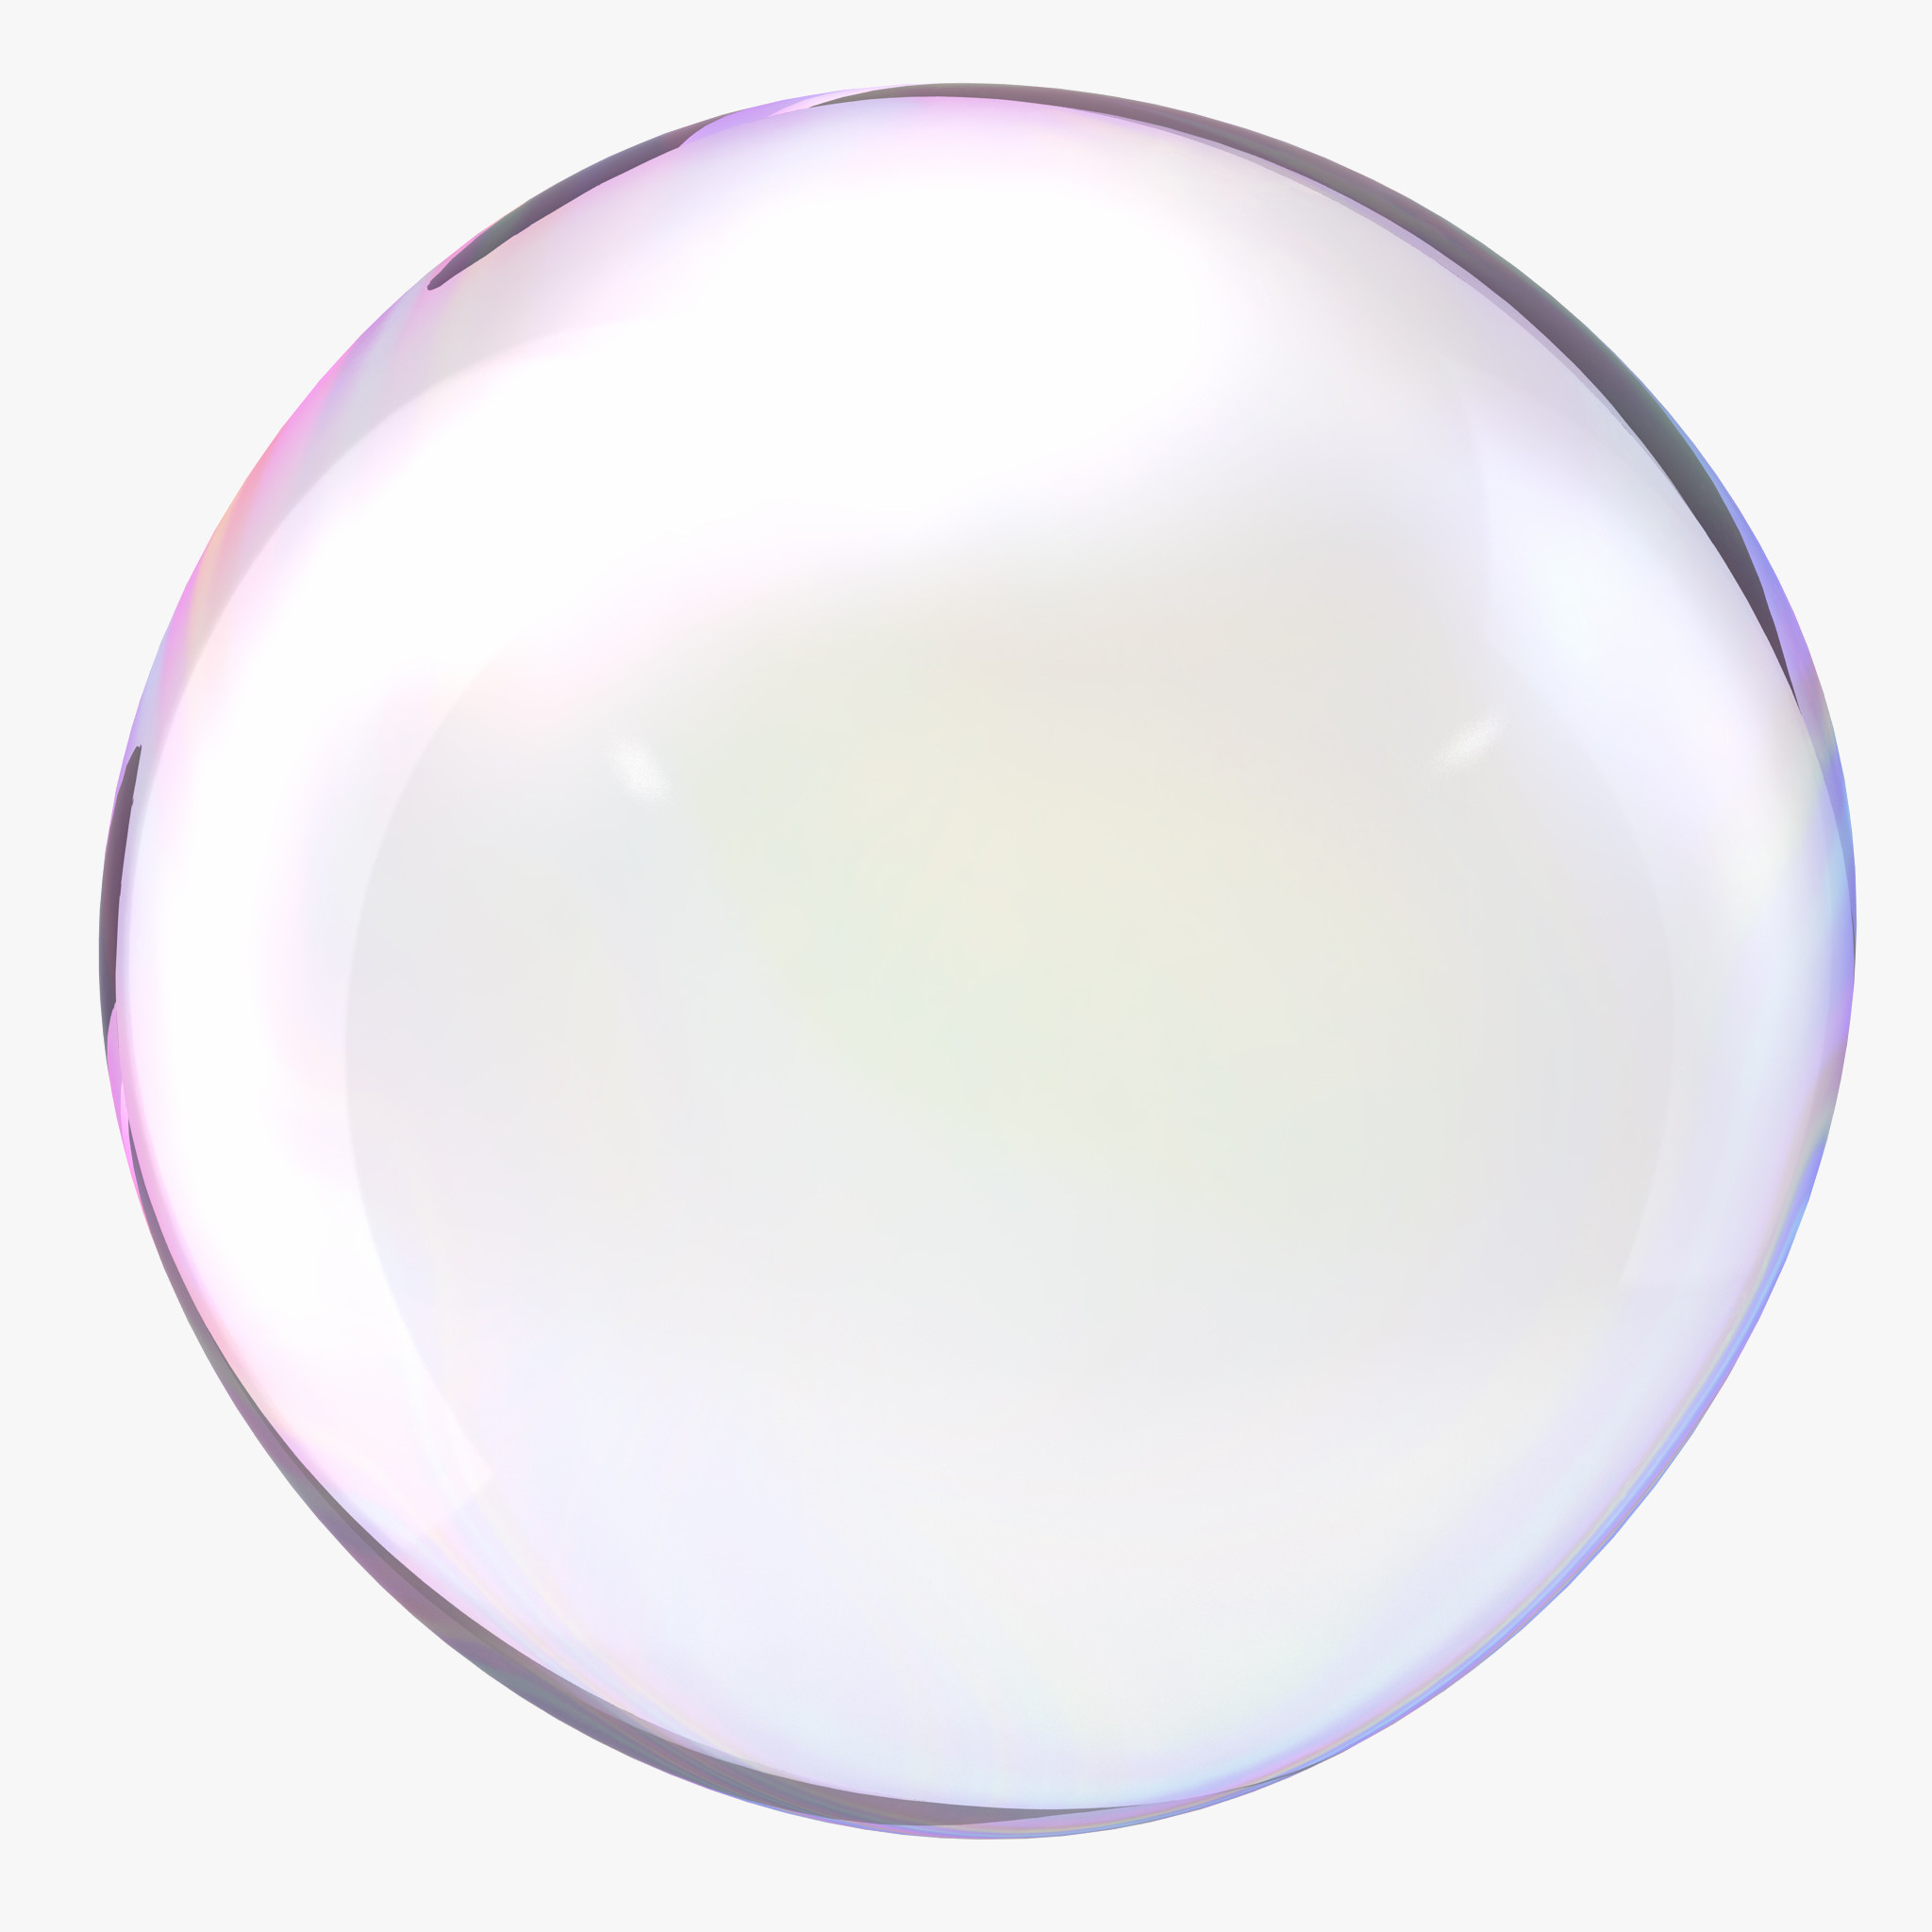 Пузыри PNG-файл